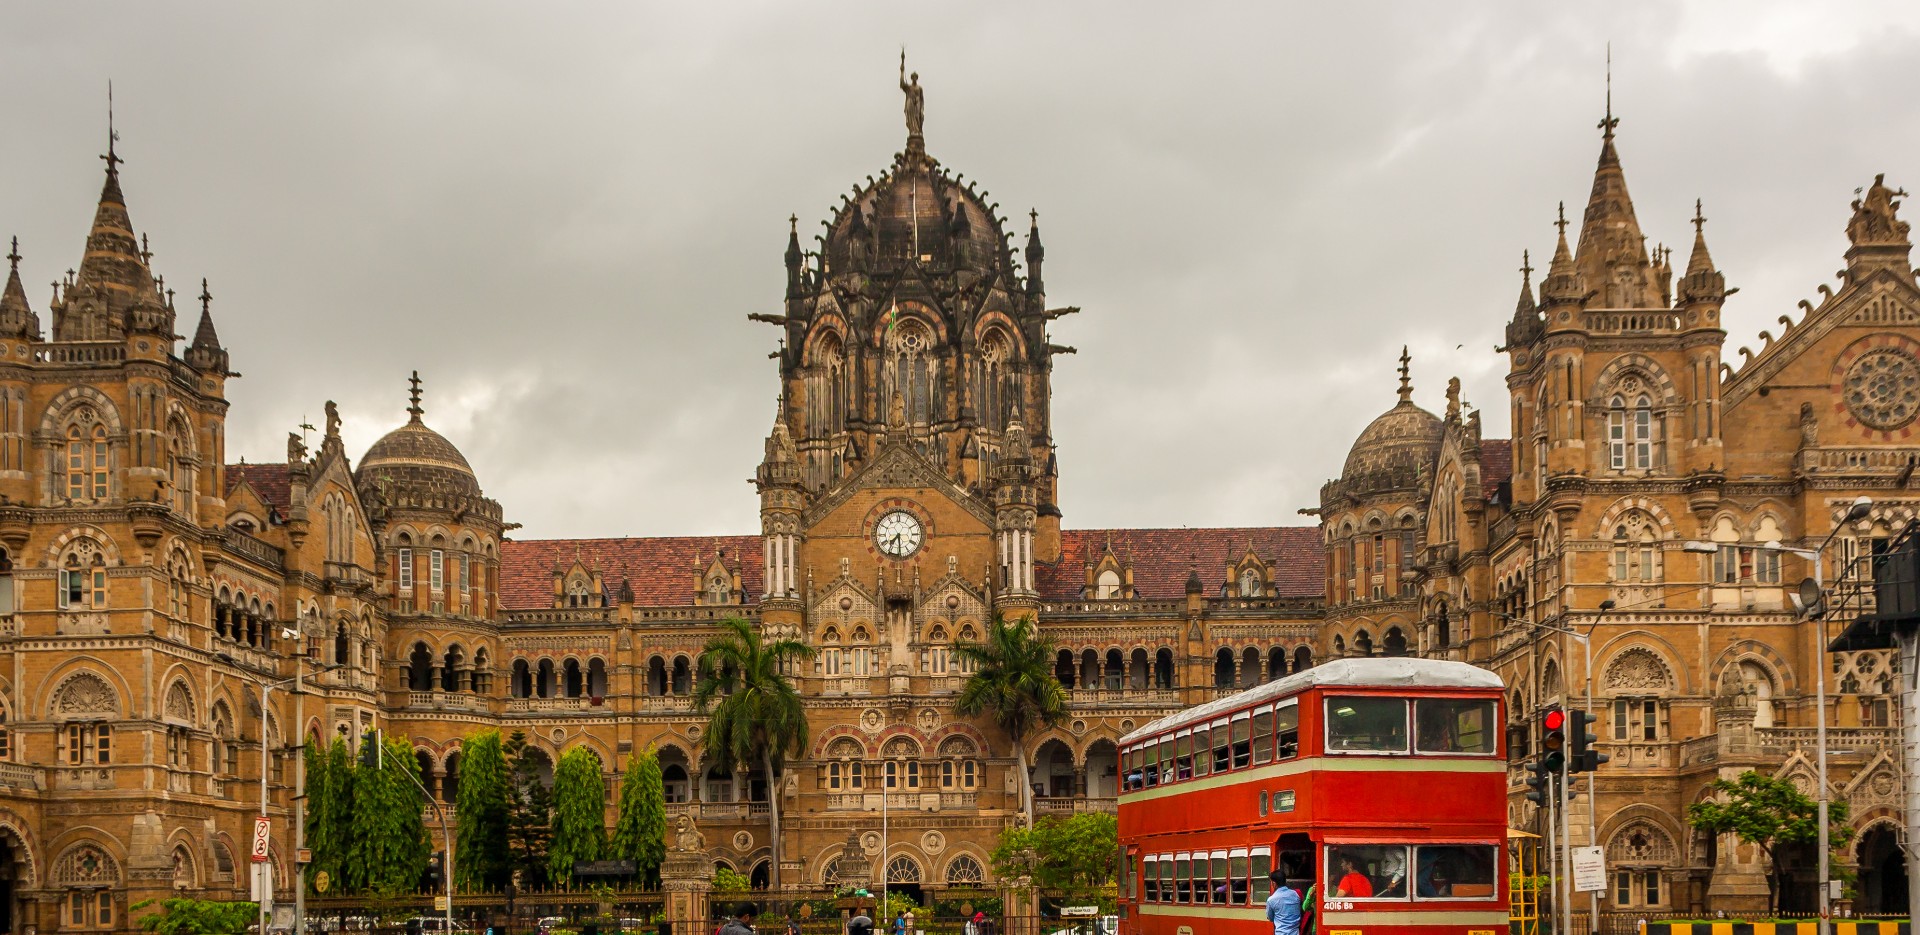 Victorian architecture in India